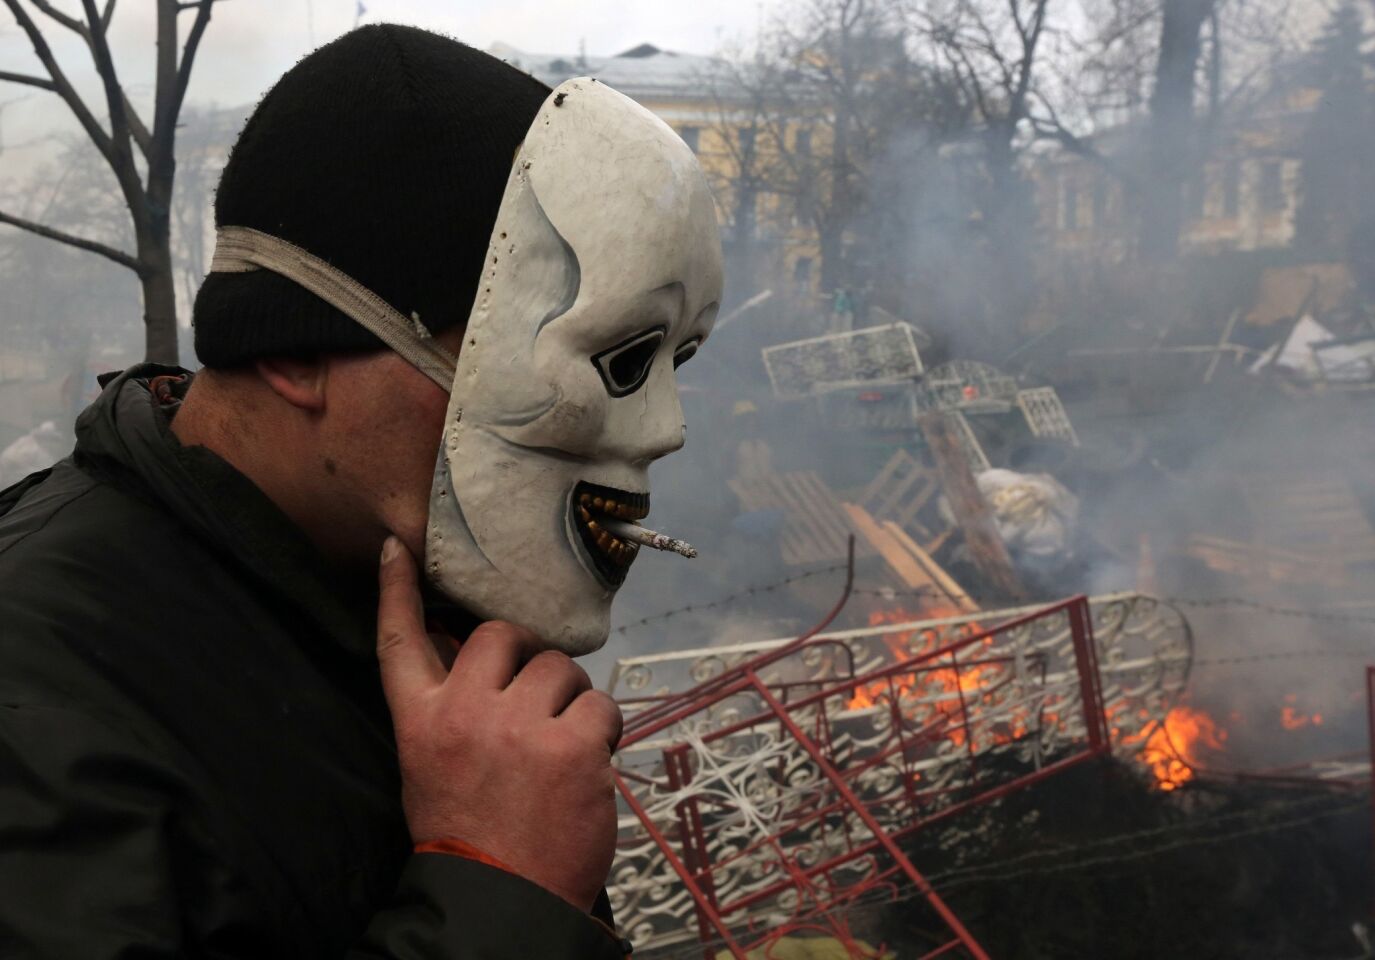 A protester takes a smoke break at the barricades in central Kiev, Ukraine, Thursday, Feb. 20, 2014